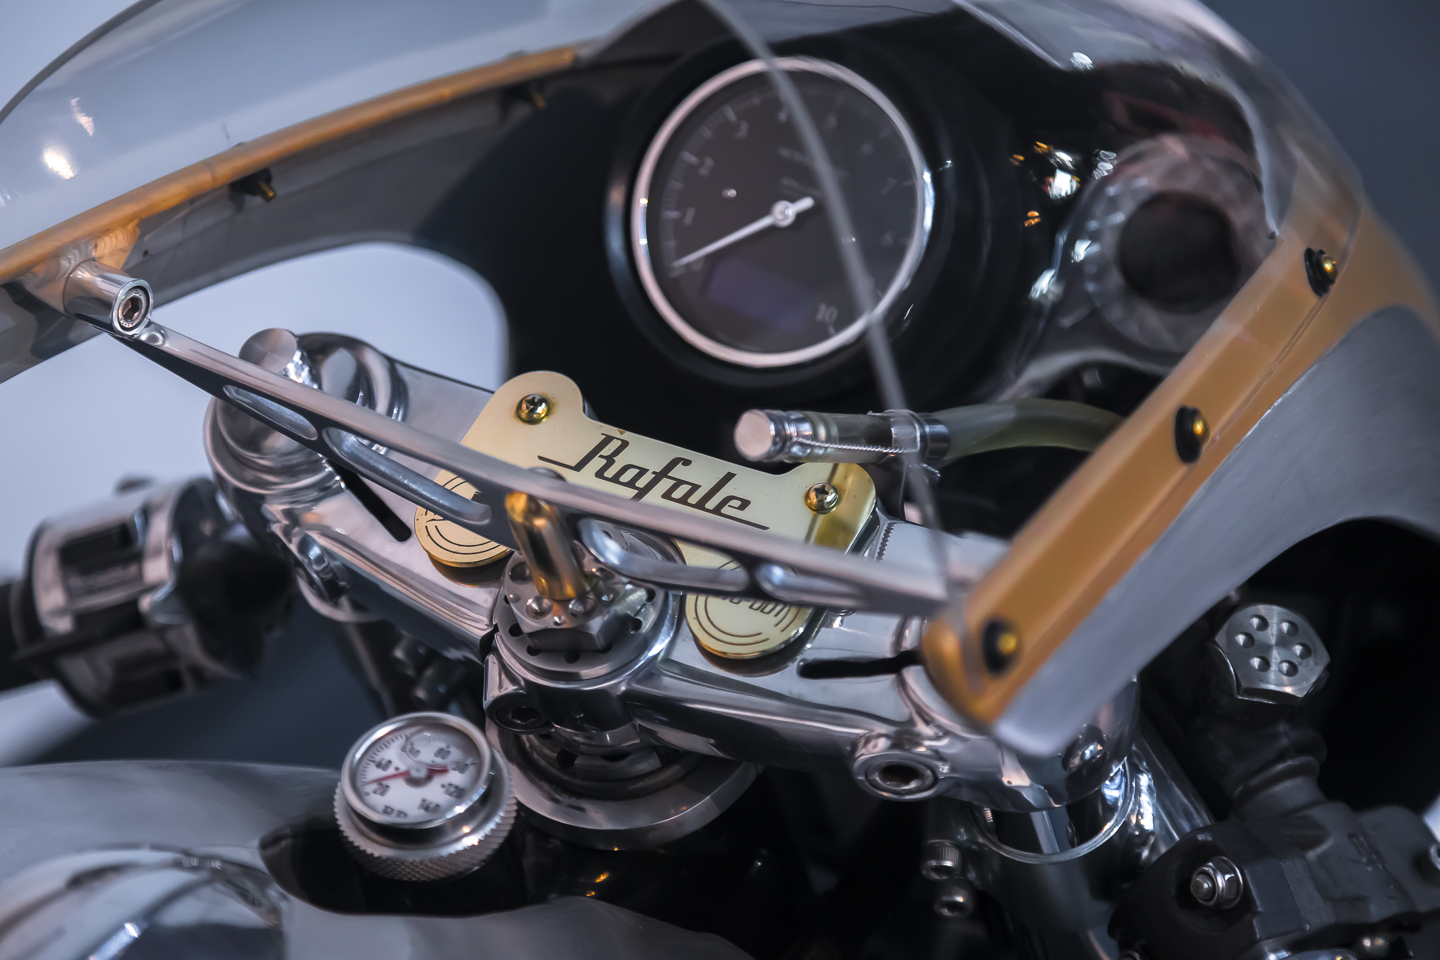 Motorcycle cockpit details